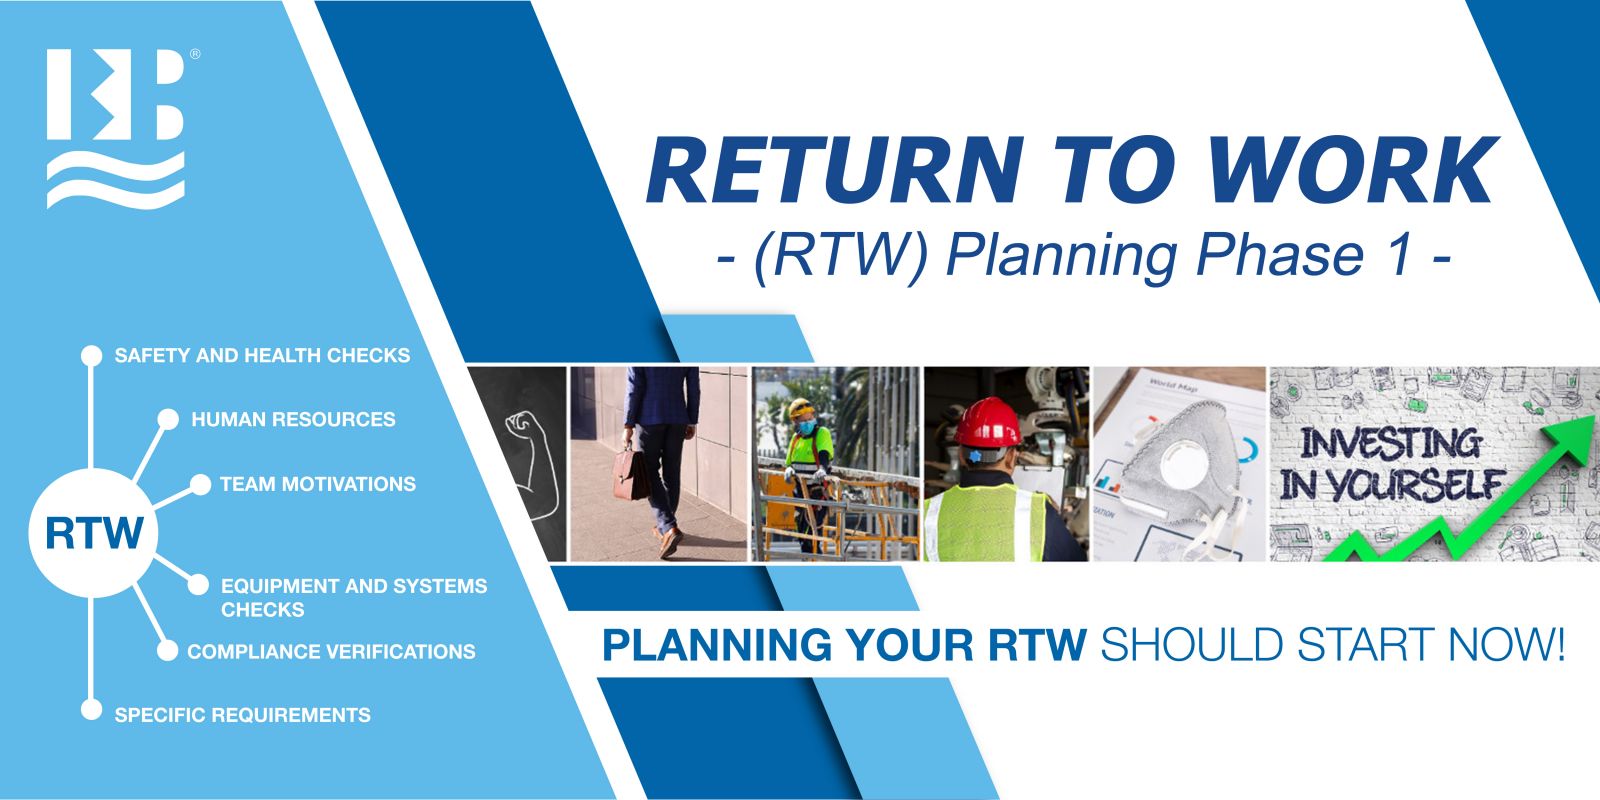 Return to Work (RTW) Planning - Phase 1